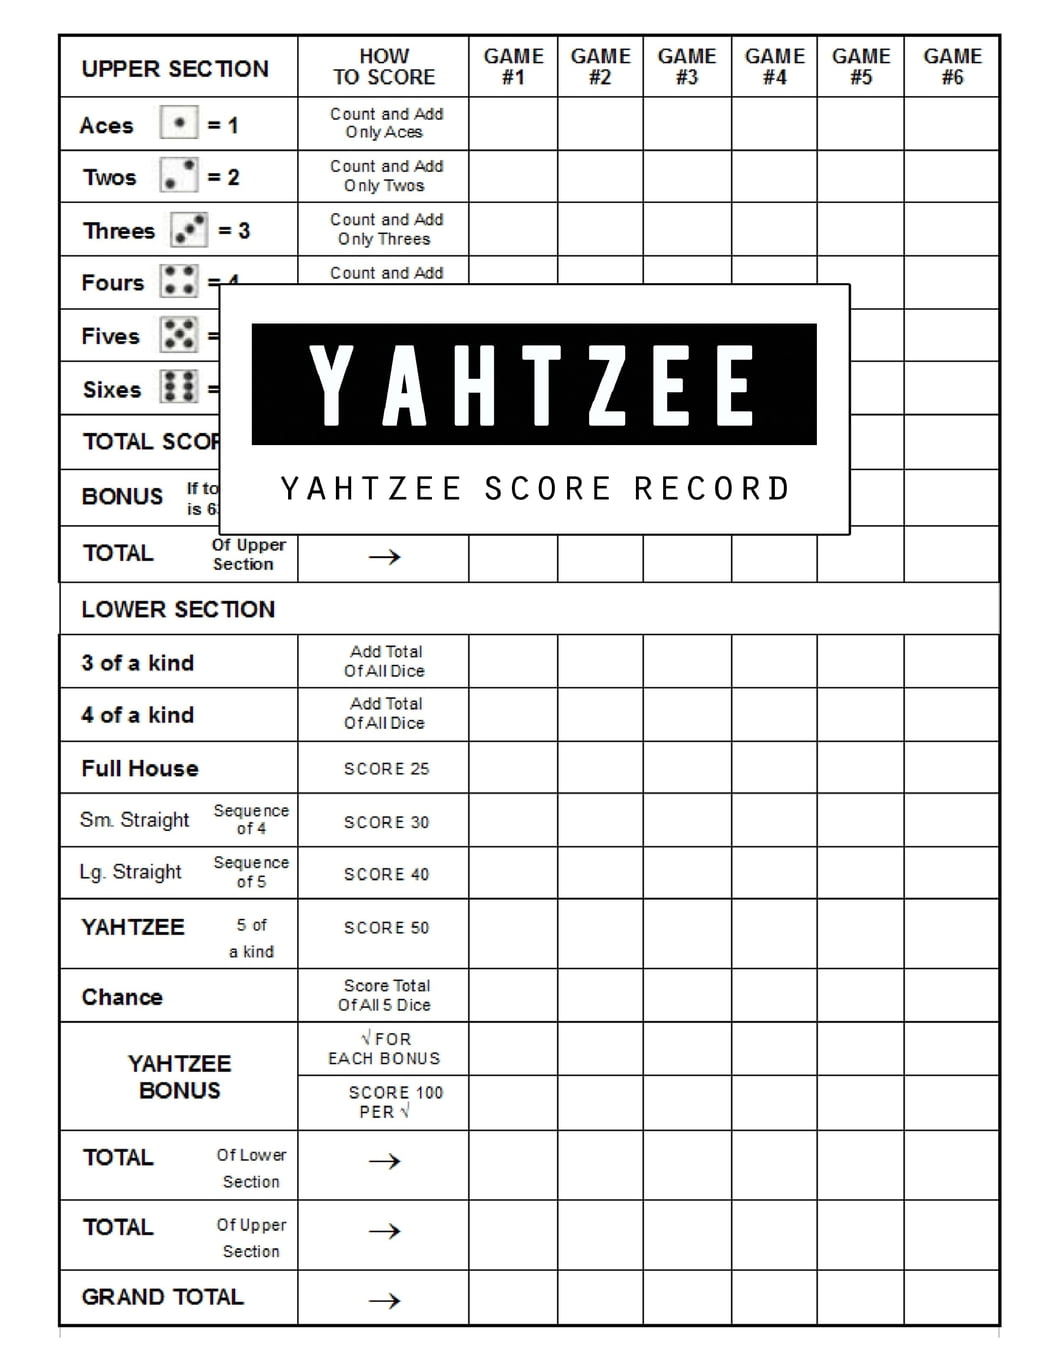 yahtzee score record yahtzee game record score keeper book yahtzee